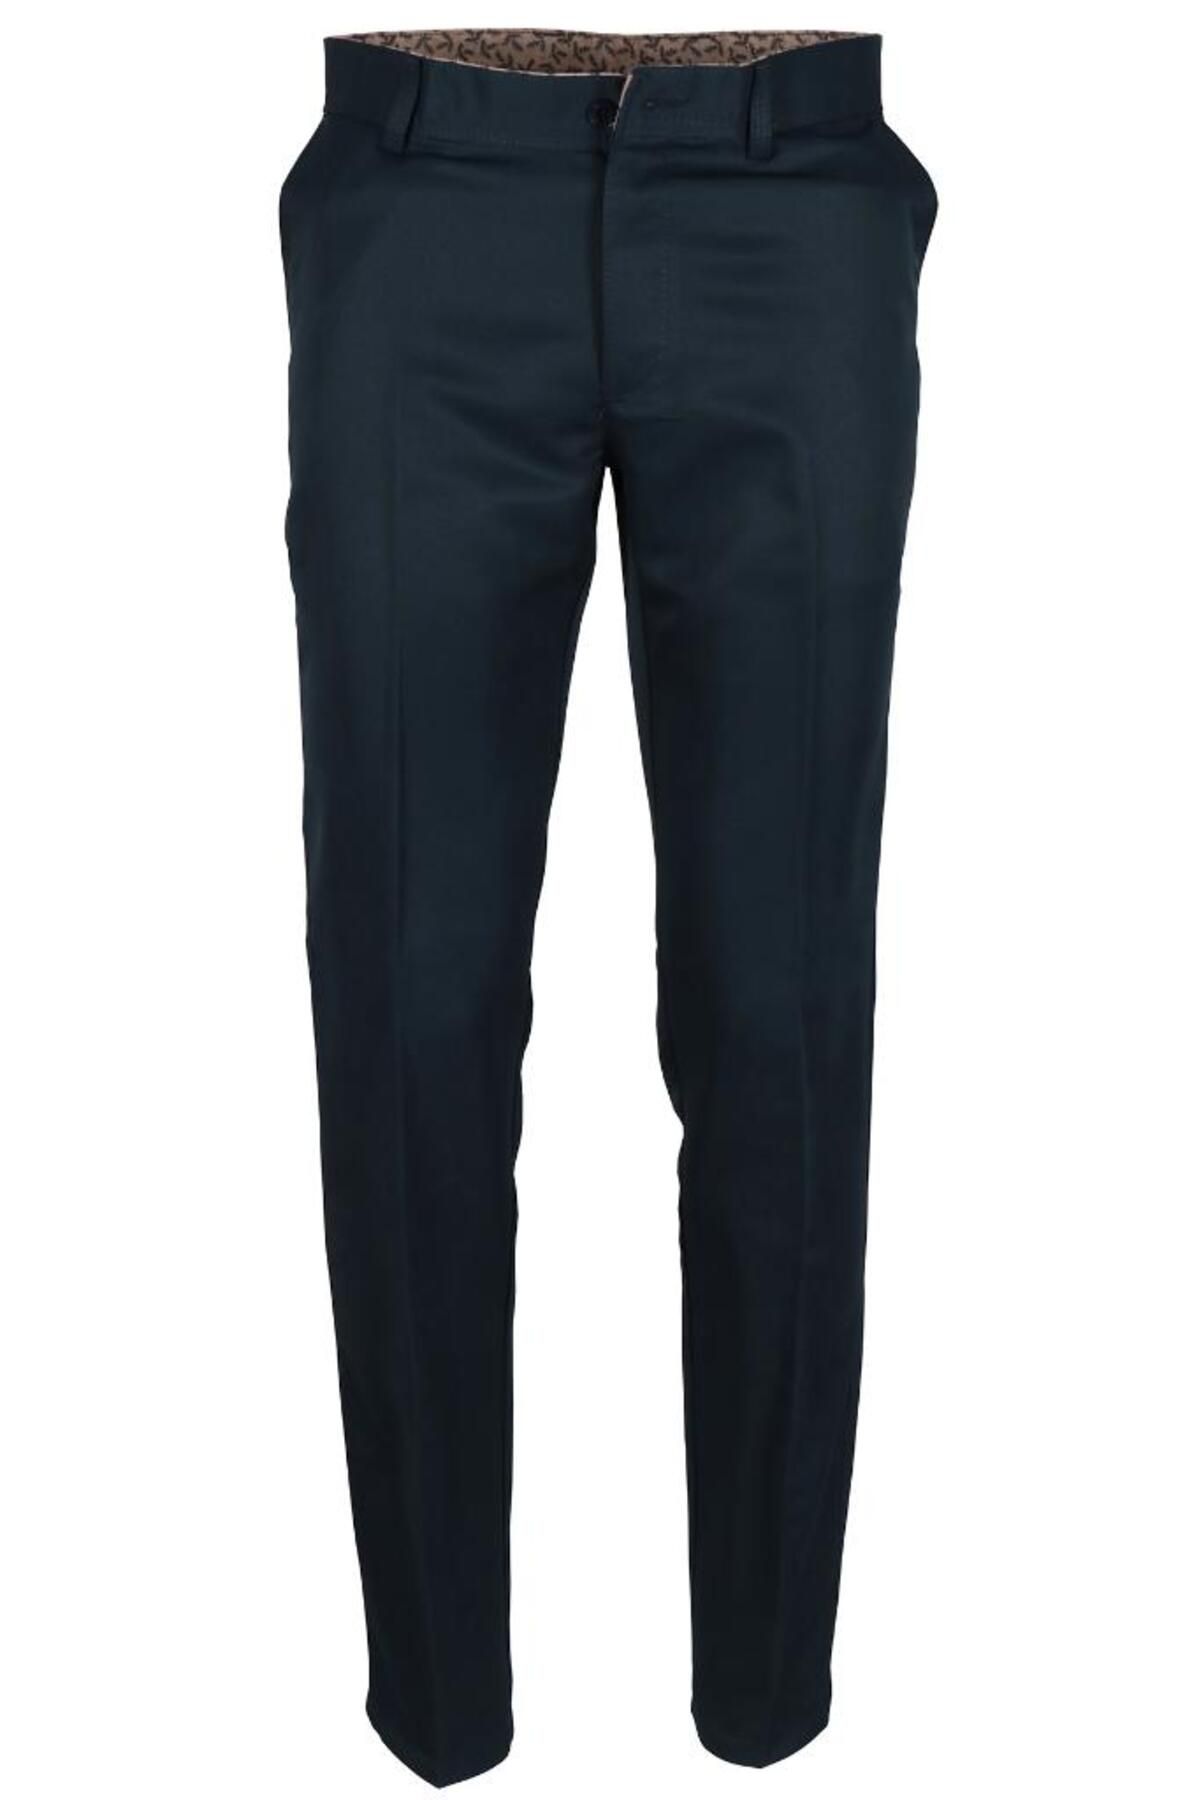 Modarar Erkek Keten Pantolon Klasik Normal Kesim RAR01159